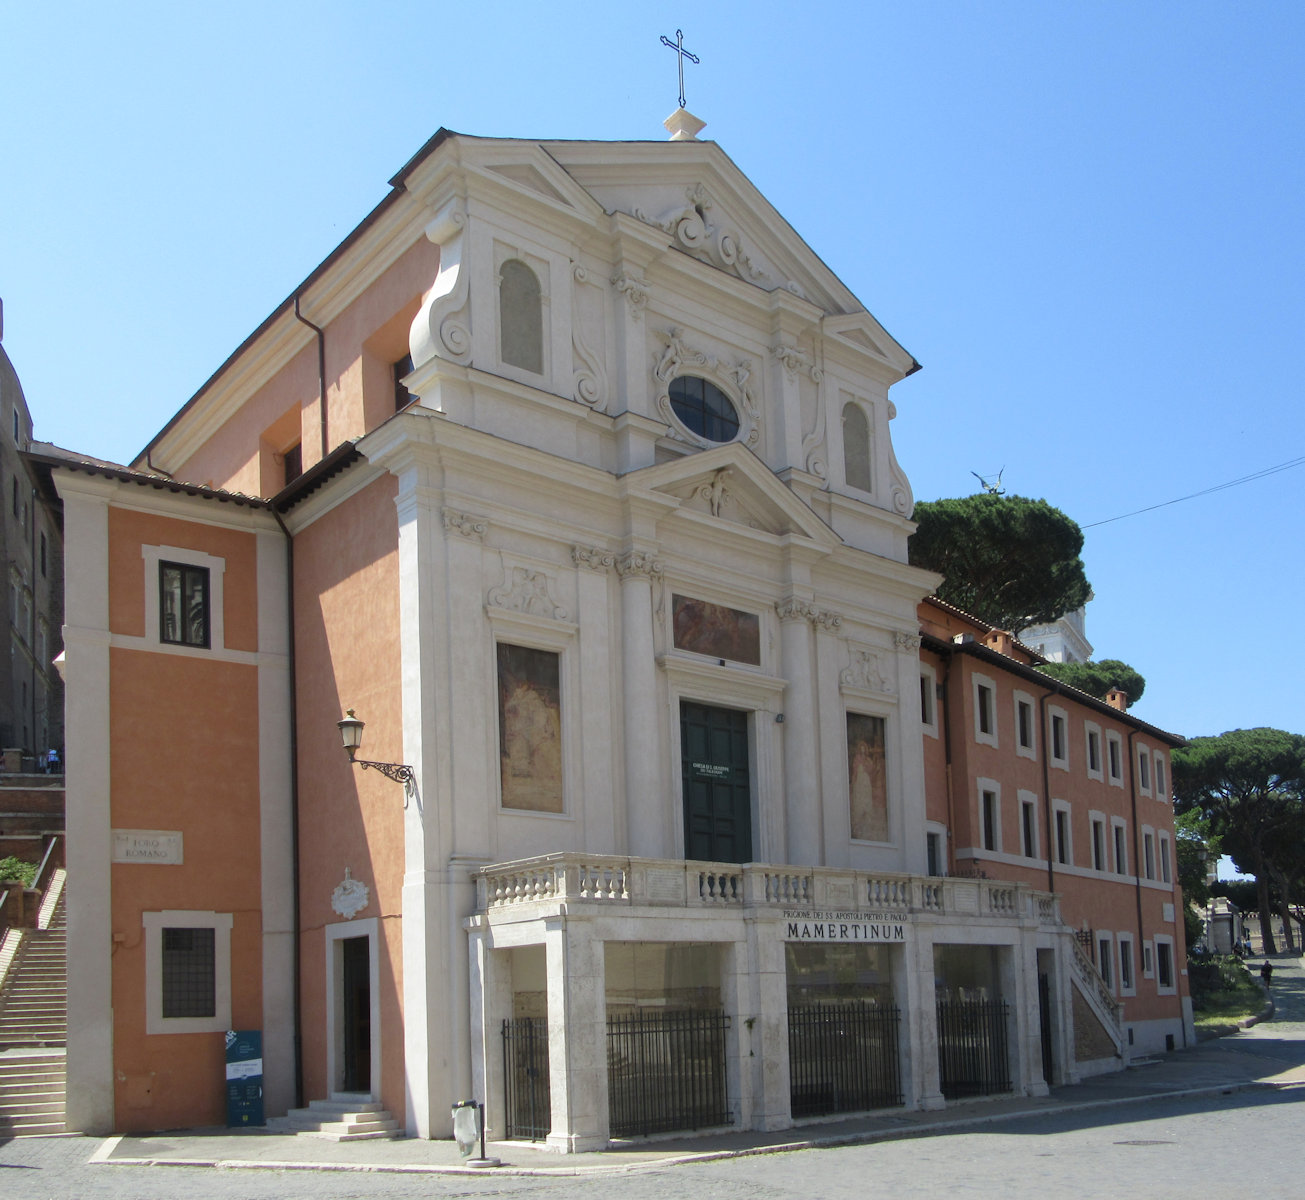 Carcere Mamertino und Kirche San Giuseppe dei Falegnami